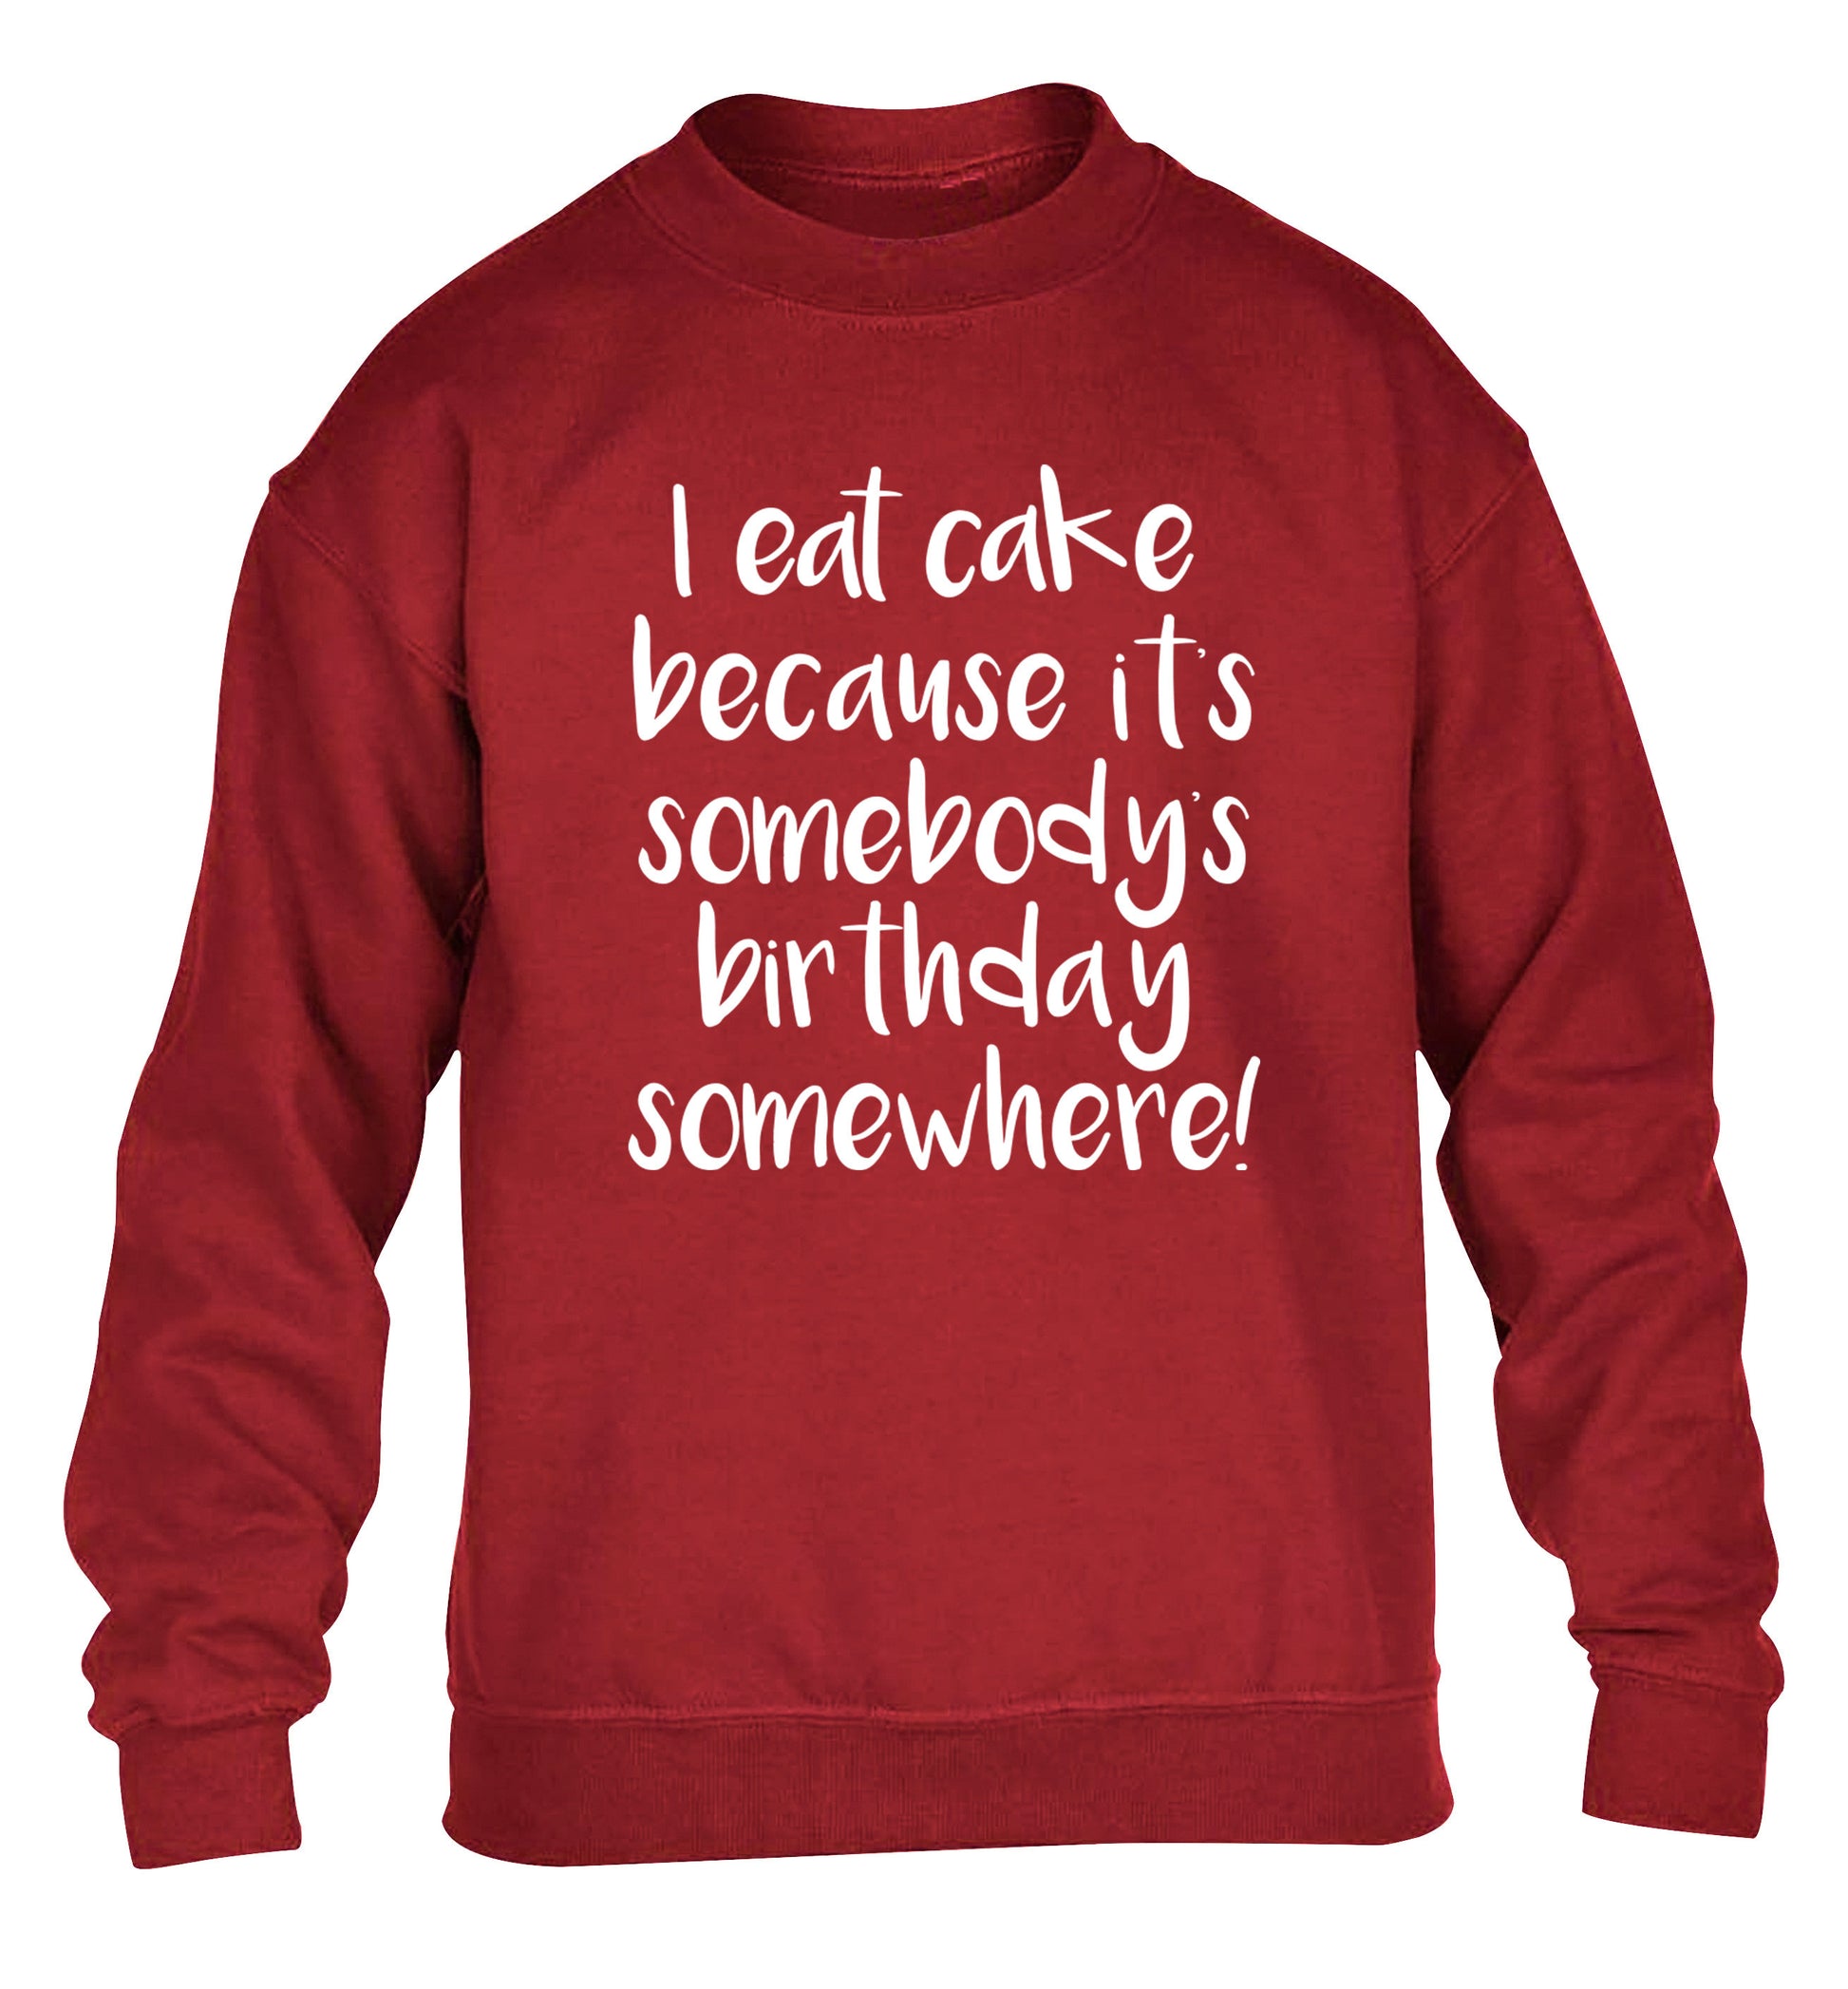 I eat cake because it's somebody's birthday somewhere! children's grey sweater 12-14 Years